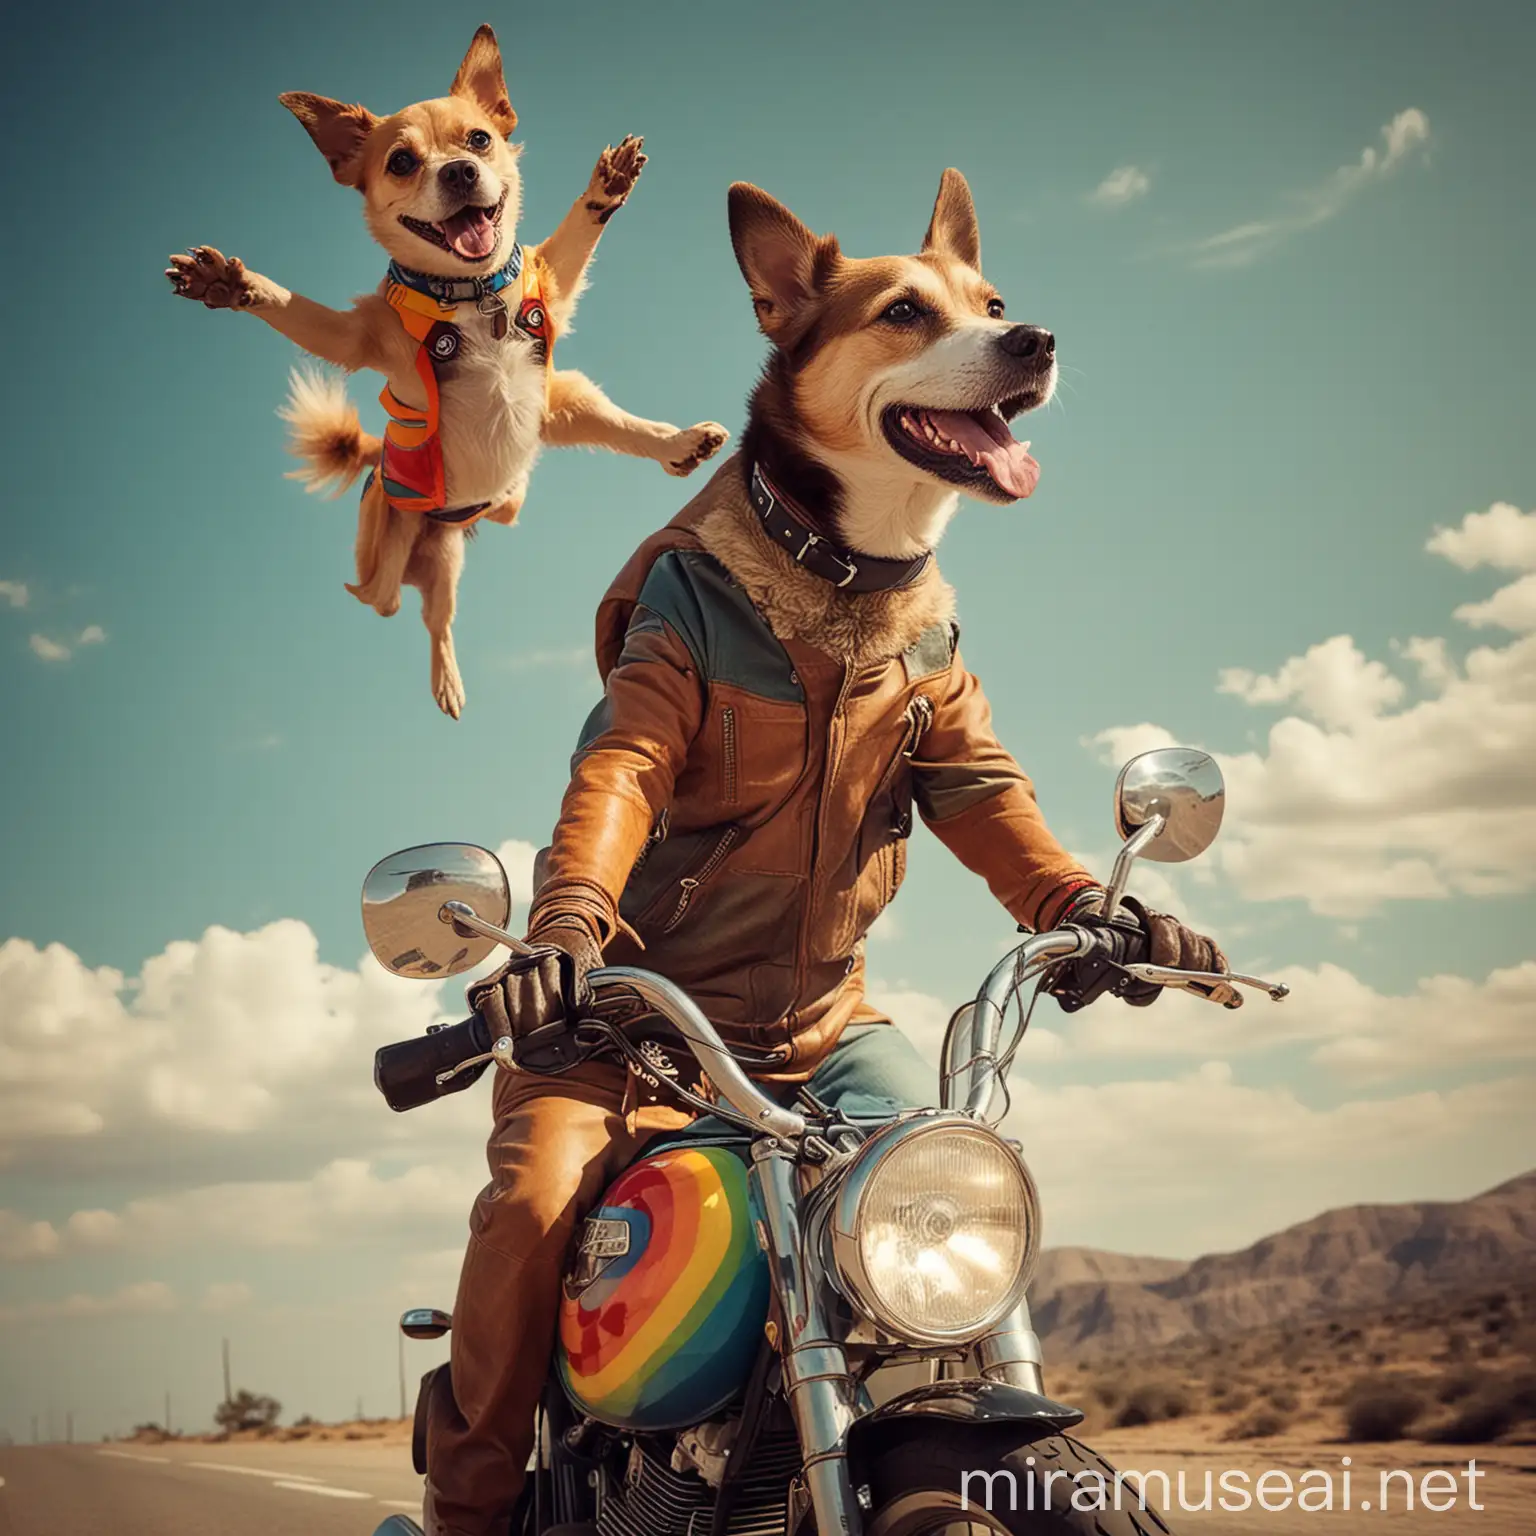 Adventurous Man on Motorcycle with Smiling Dog Papa Bike